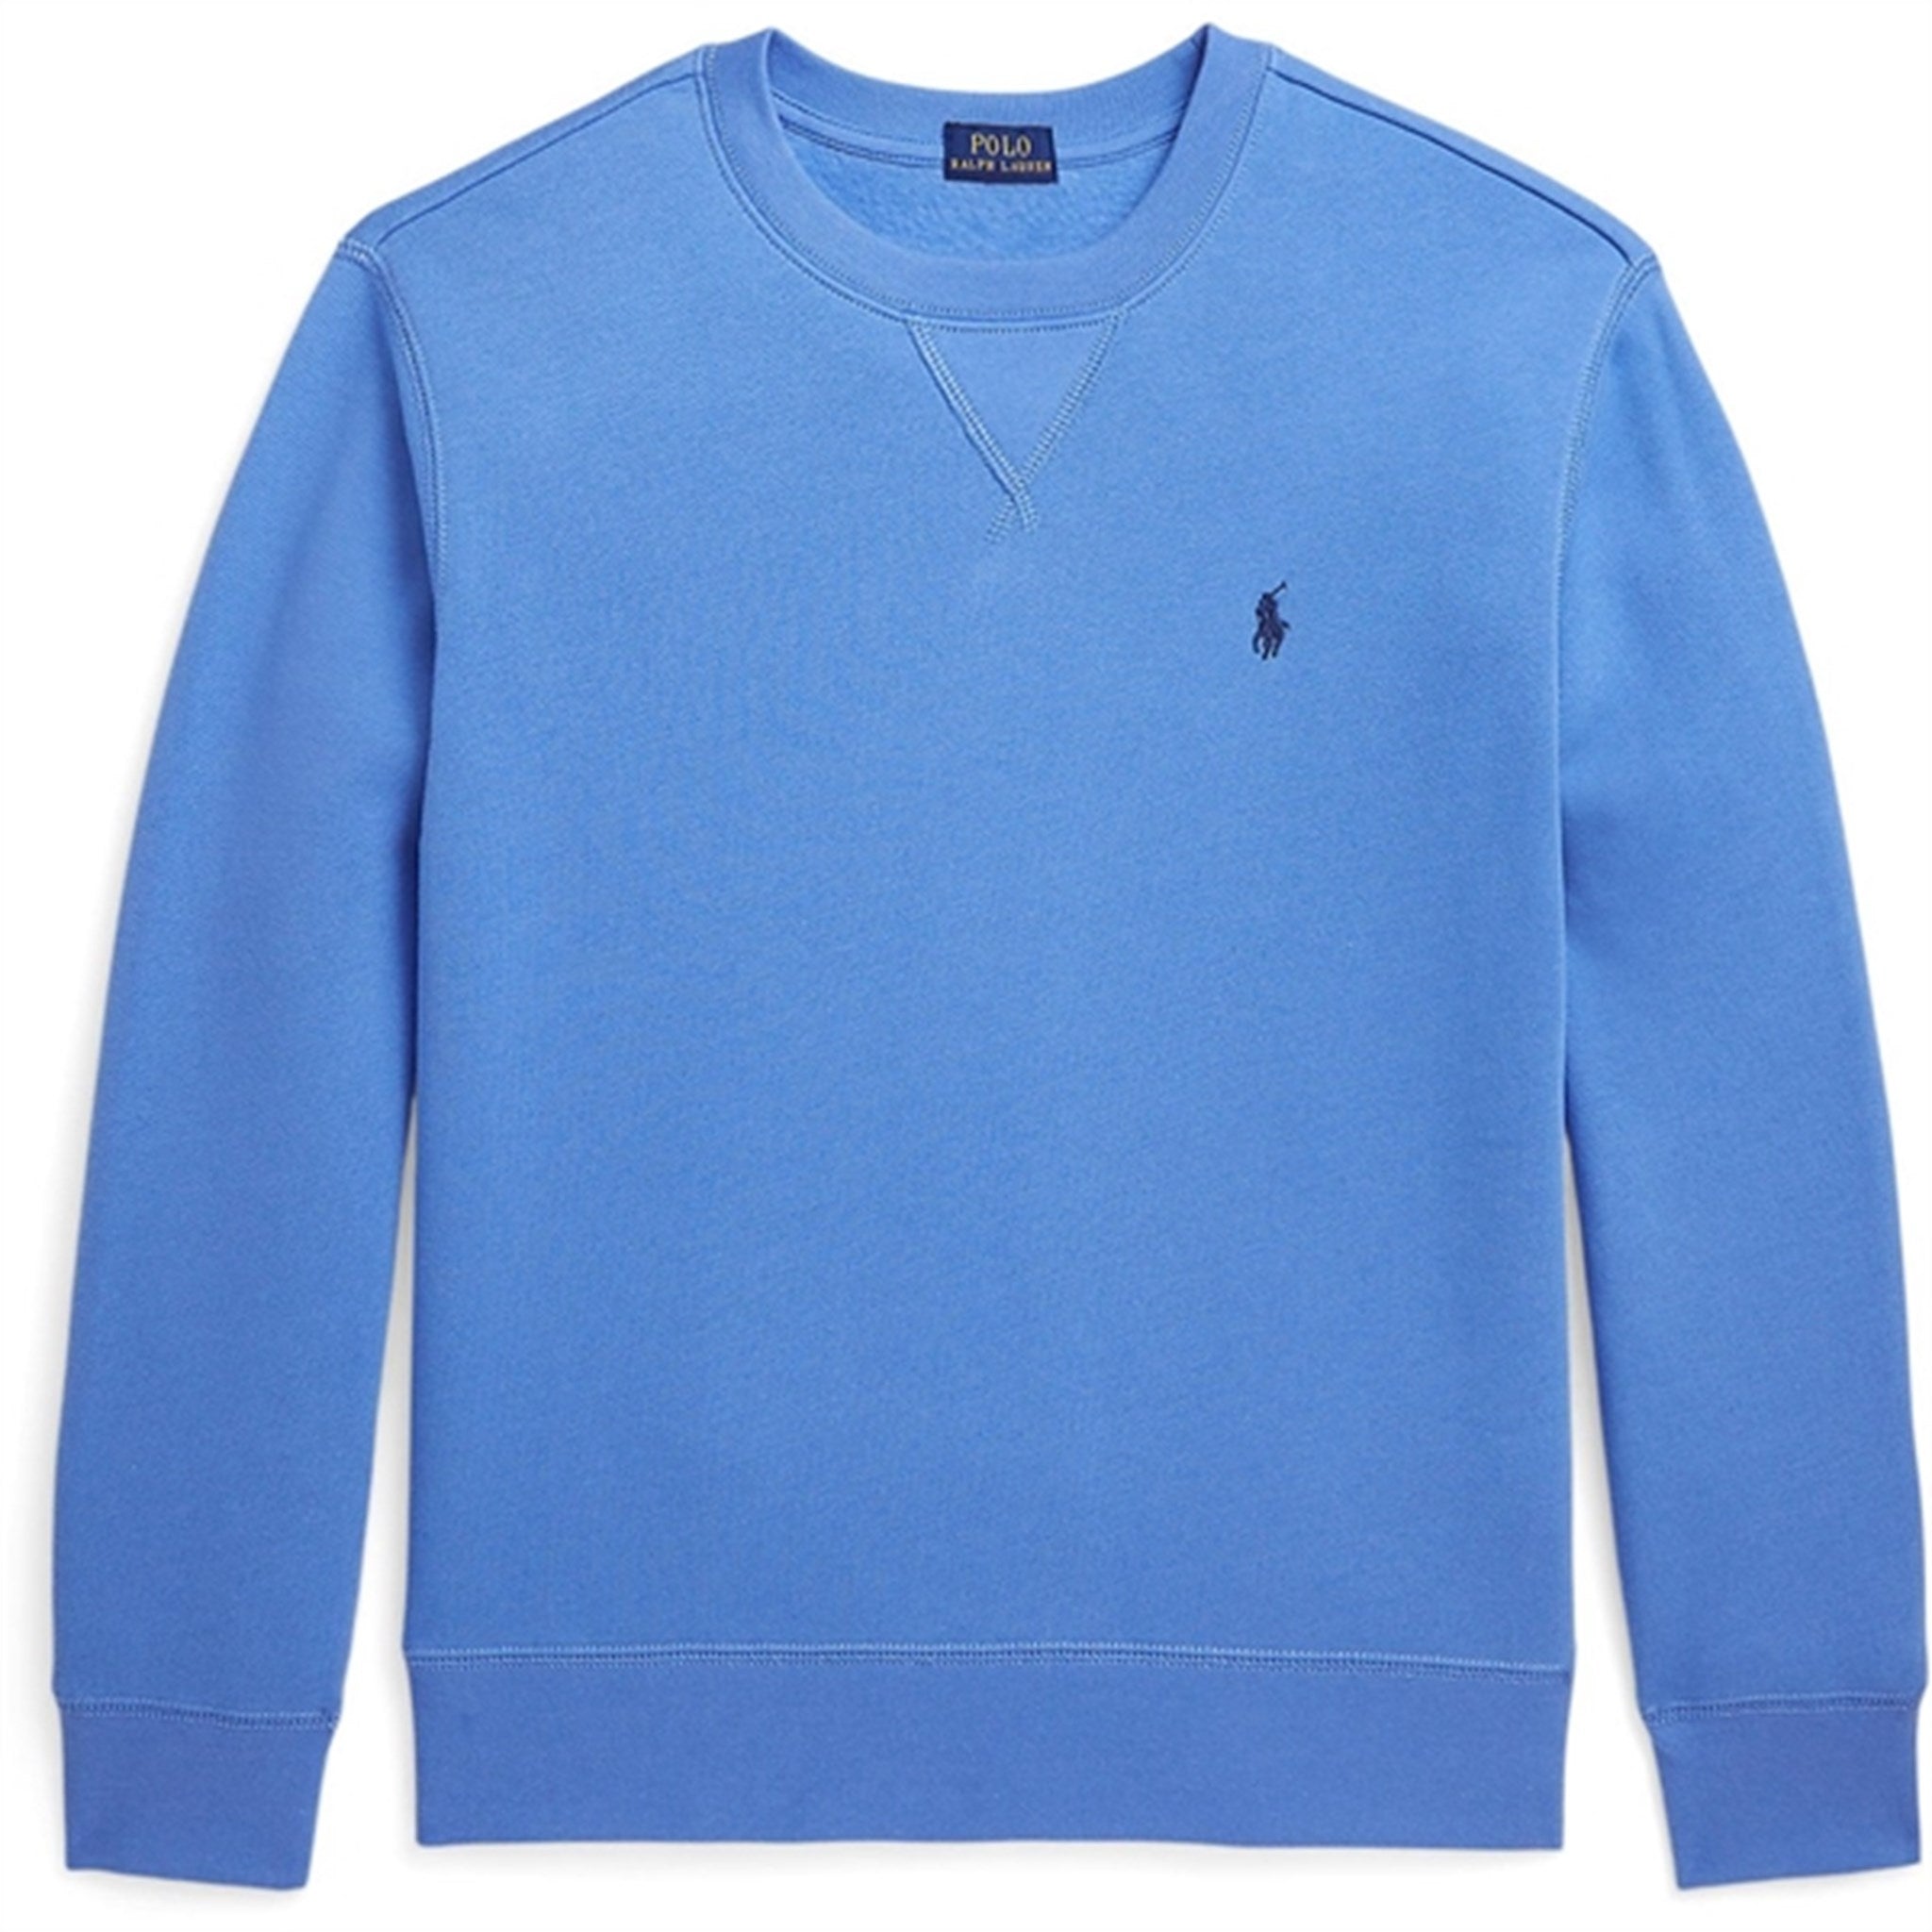 Polo Ralph Lauren Boys Sweatshirt Summer Blue